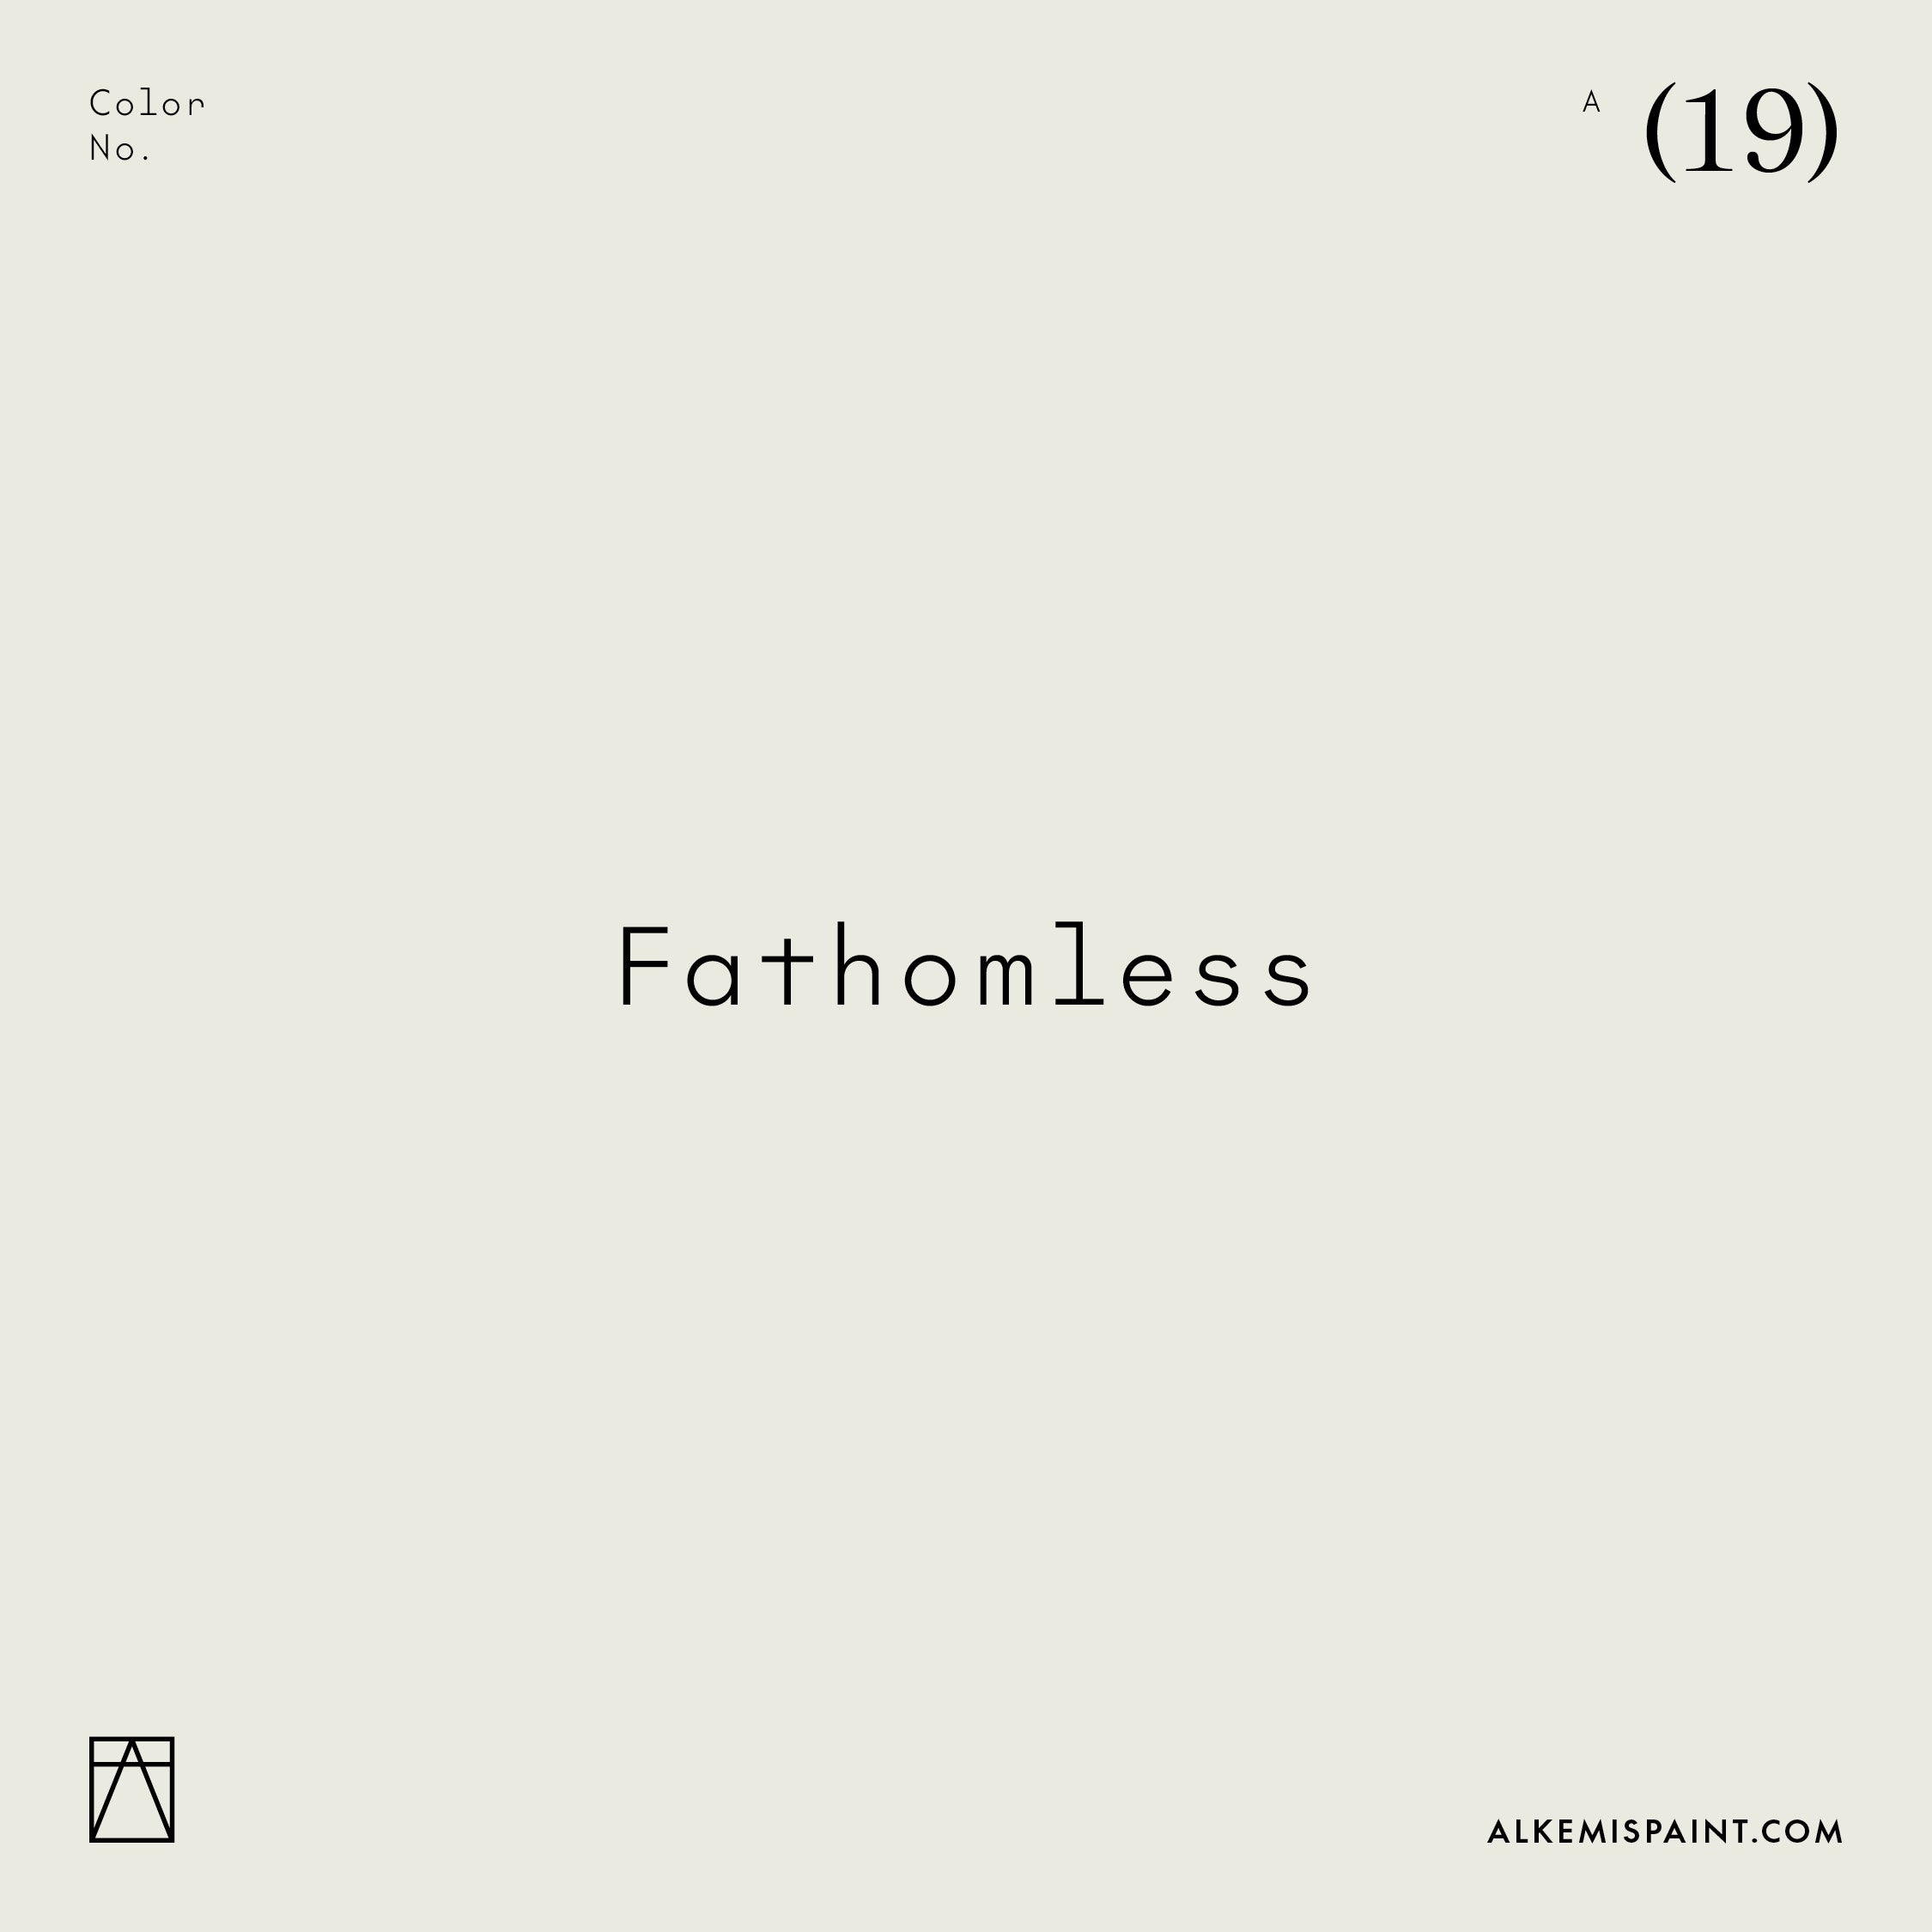 Fathomless (19)